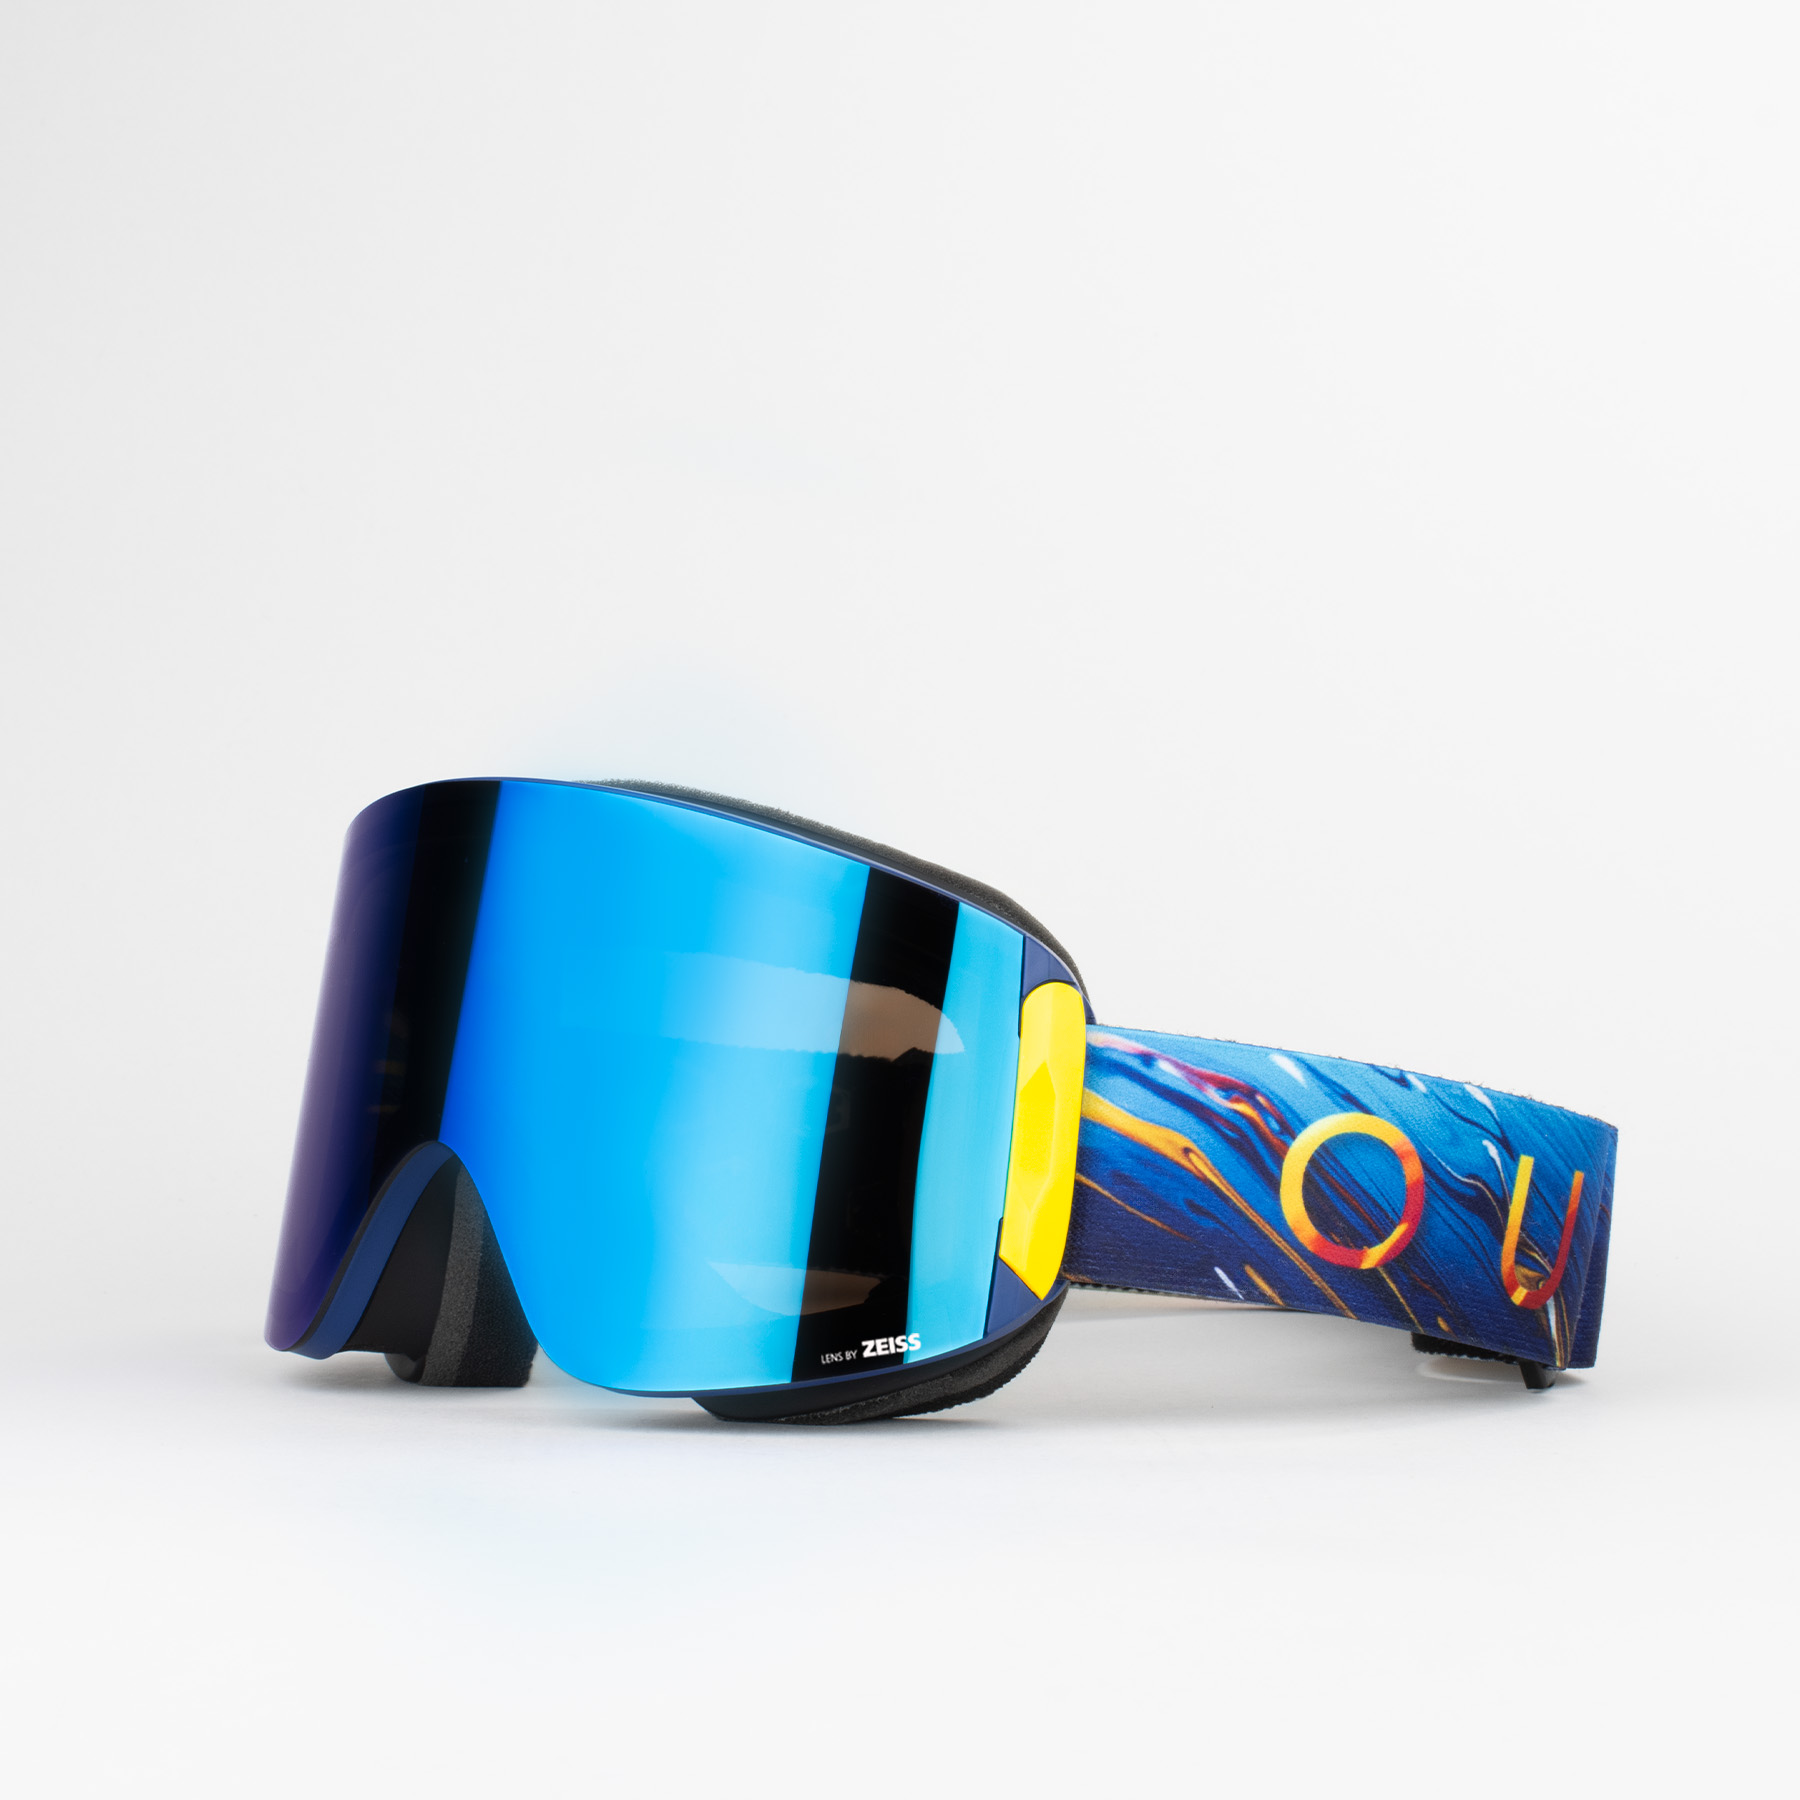 Maschera da sci Katana colore Atmosphere con lente Blue MCI e seconda lente Storm